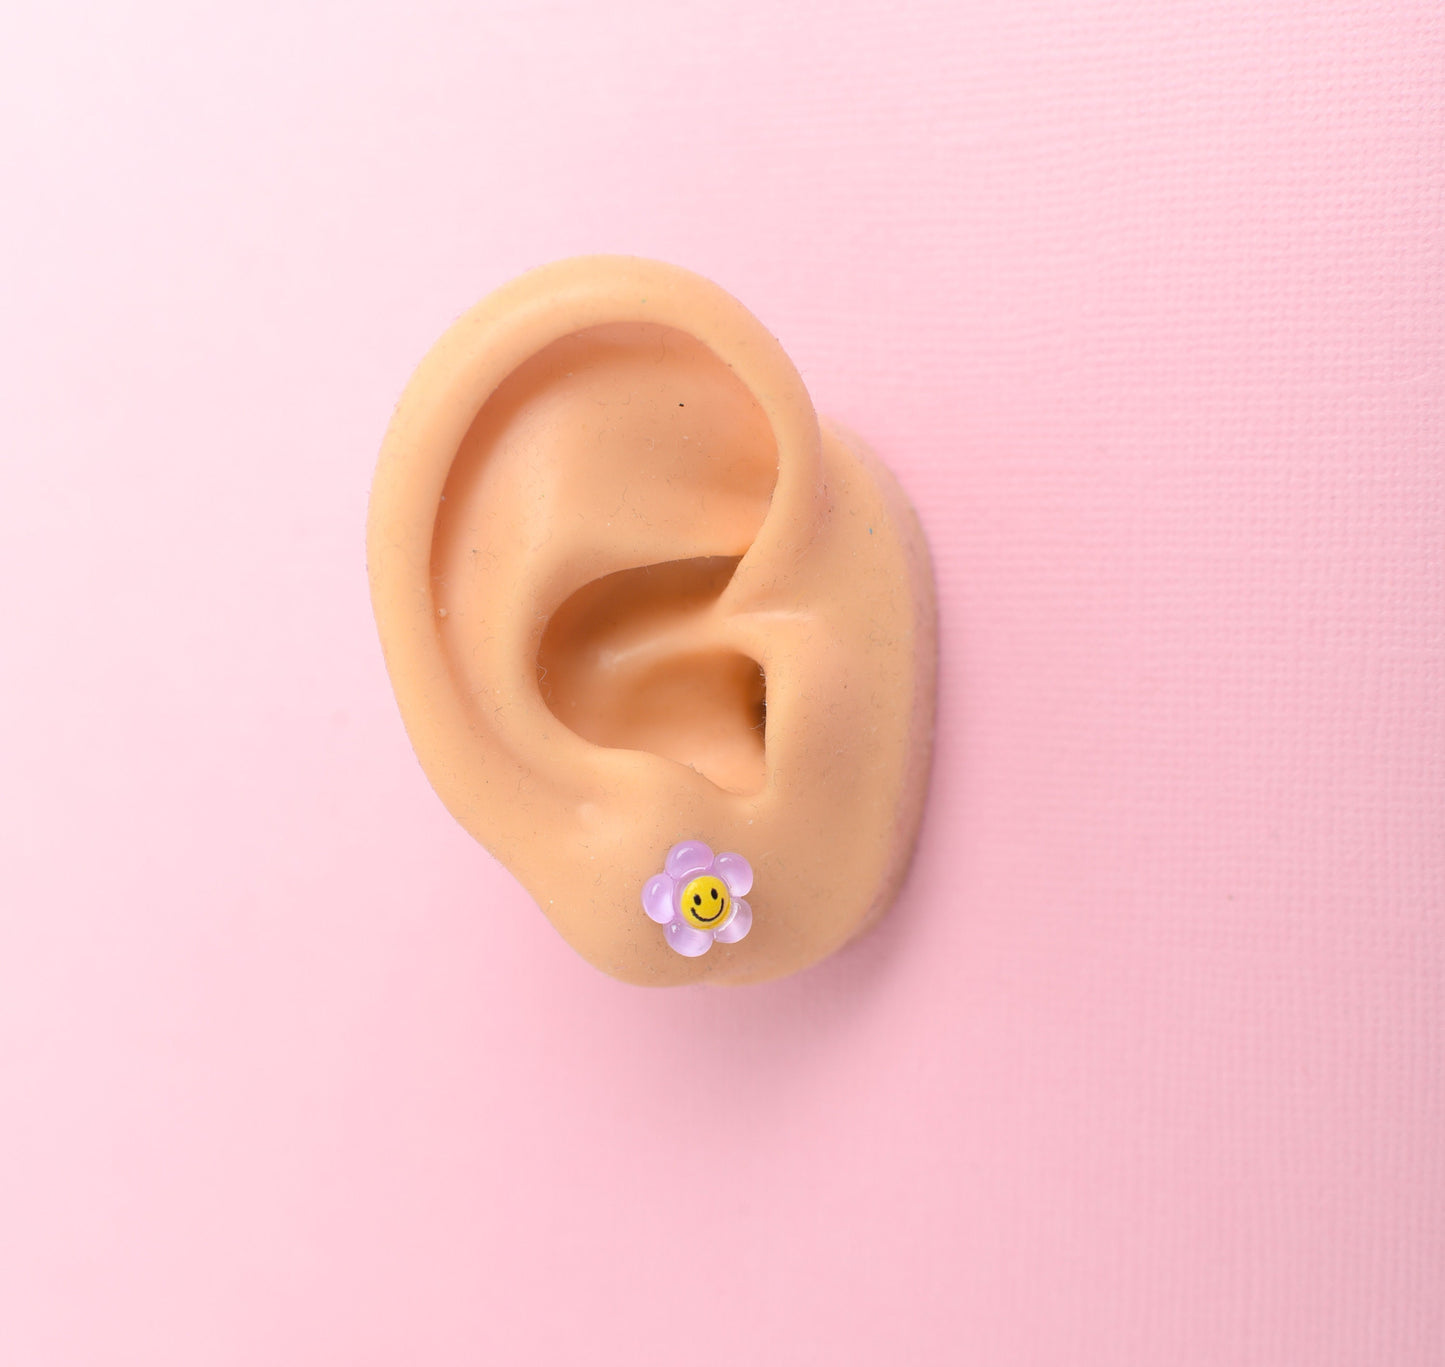 Mini Happy Face Flower Earring Trio with Titanium Posts